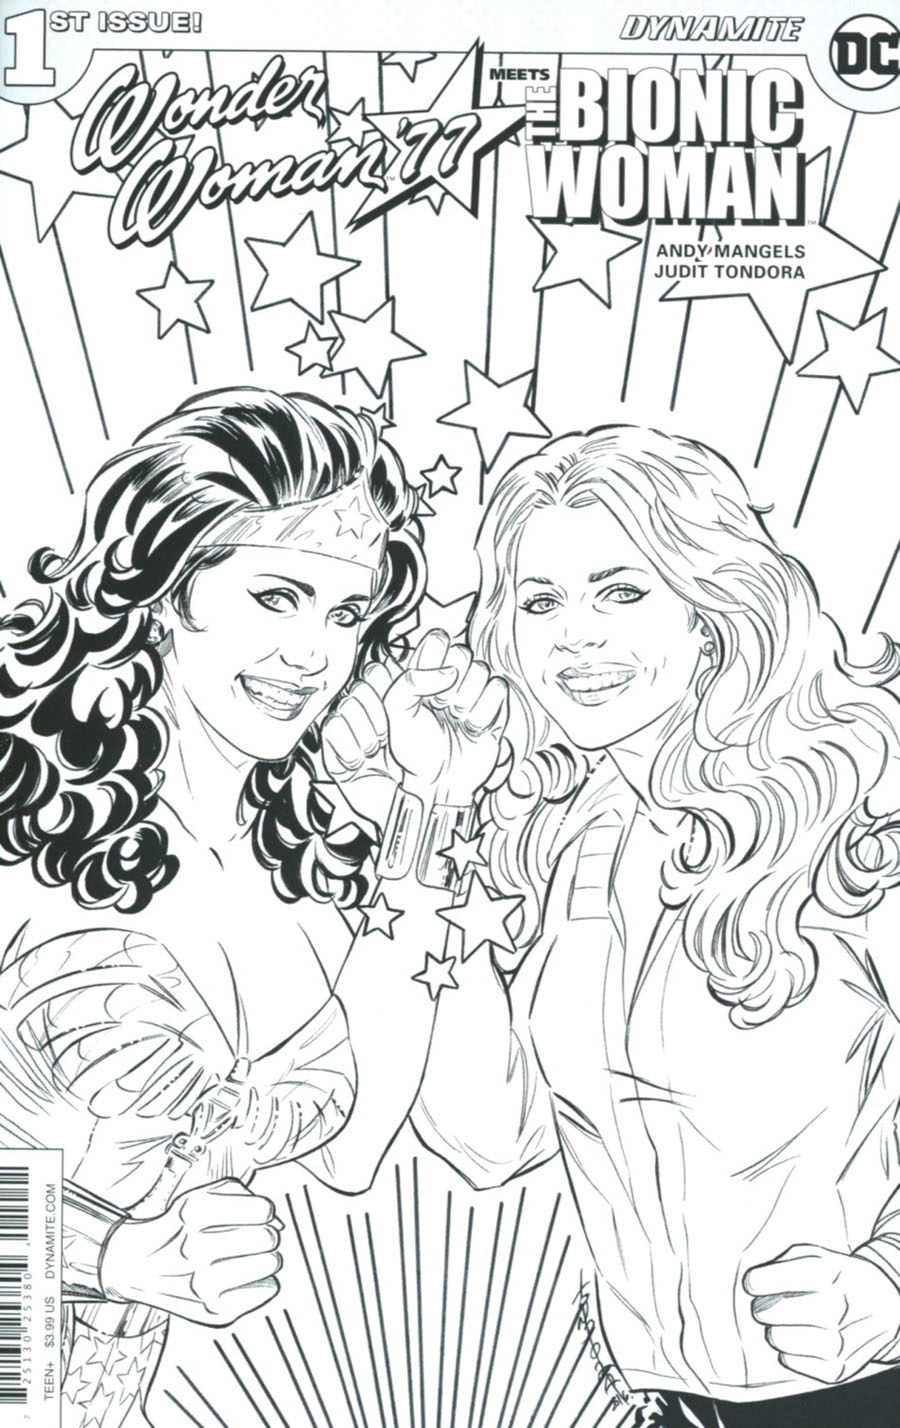 Wonder Woman 77 Meets The Bionic Woman #1 Cover D Variant Judit Tondora Adult Coloring Book Cover